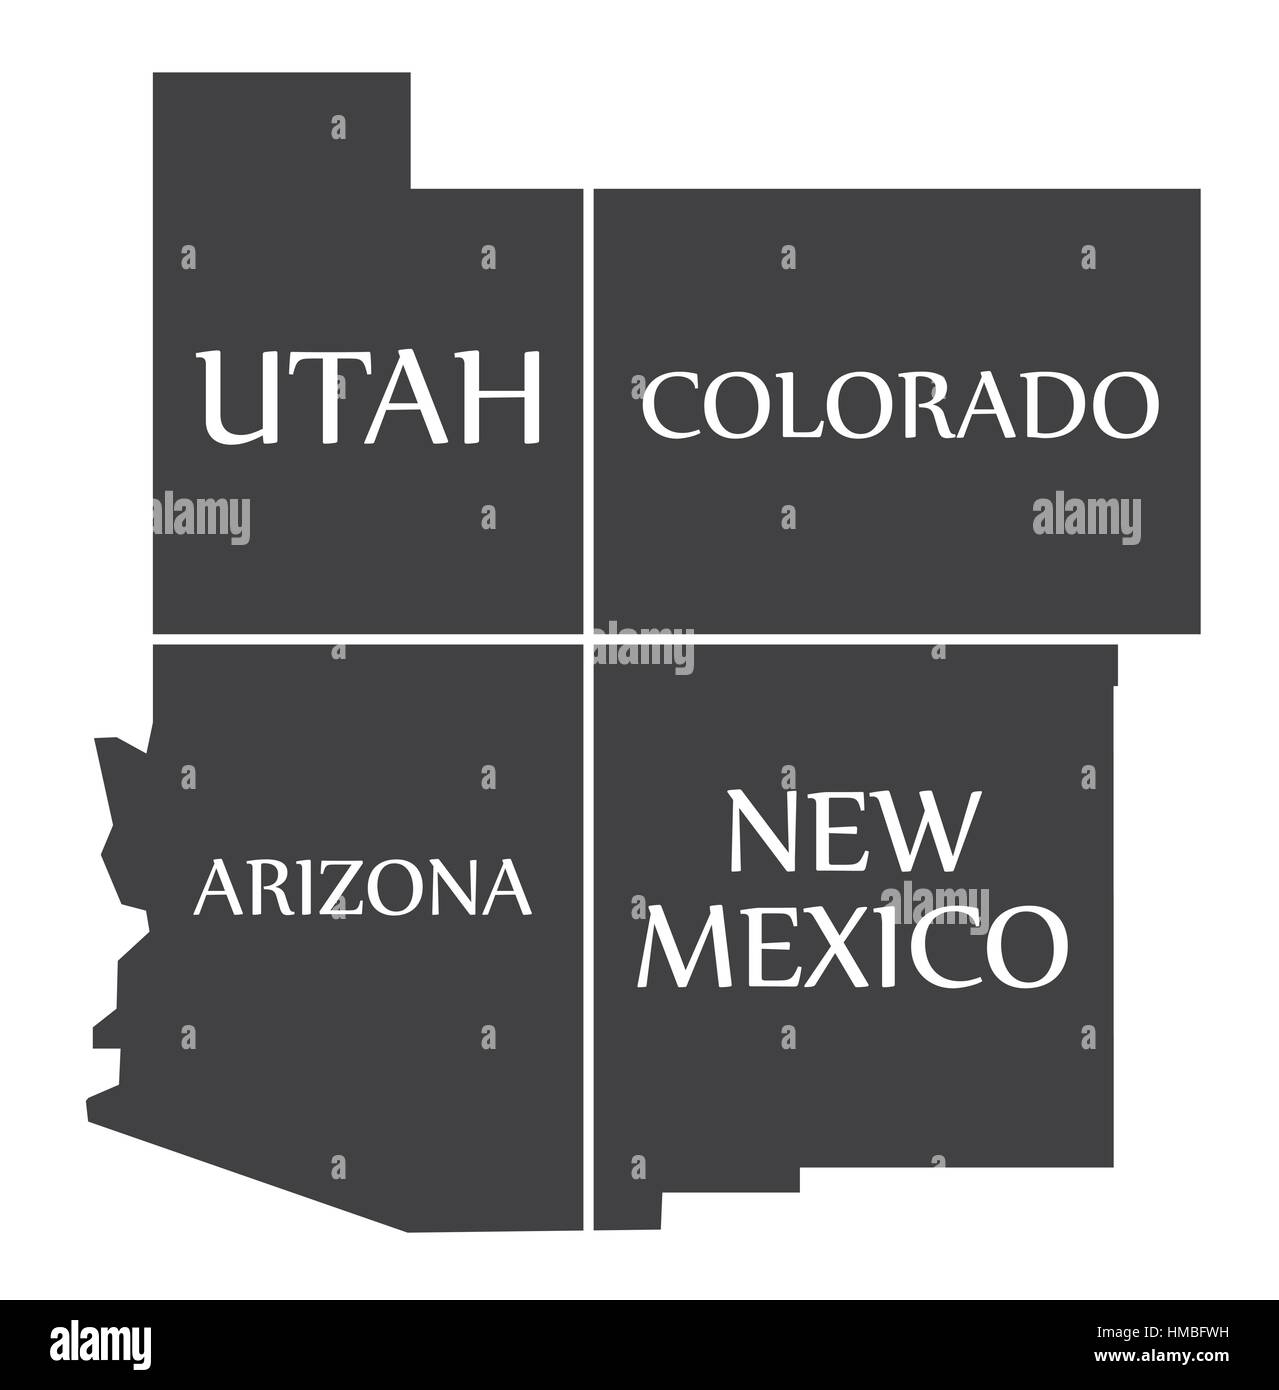 Utah - Colorado - Arizona - New Mexico Map labelled black illustration Stock Vector